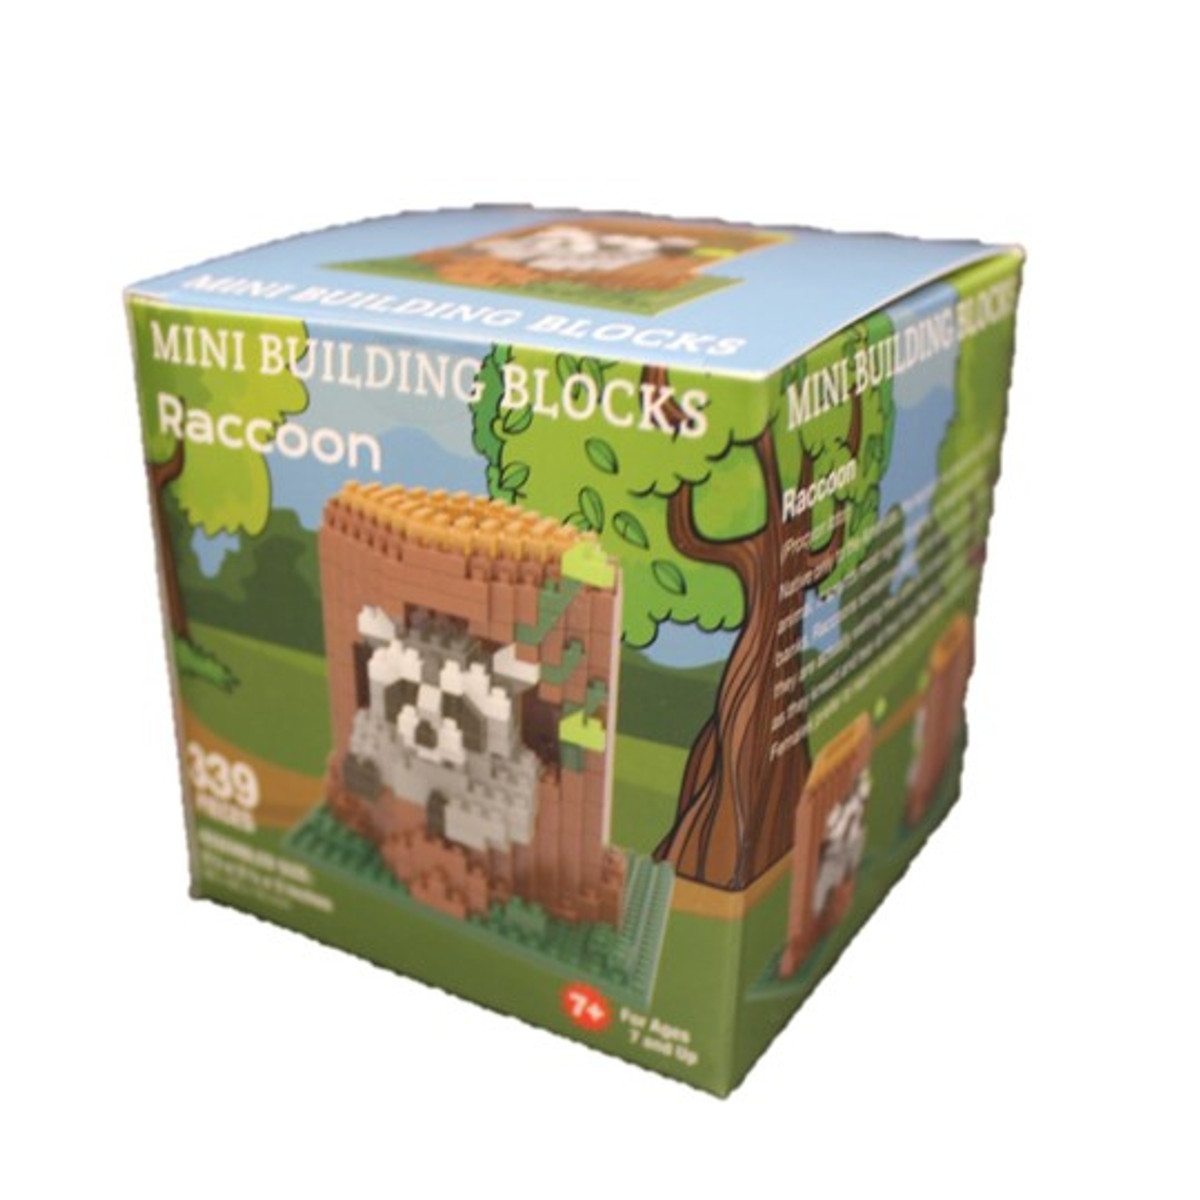 Mini Blocks - Raccoon